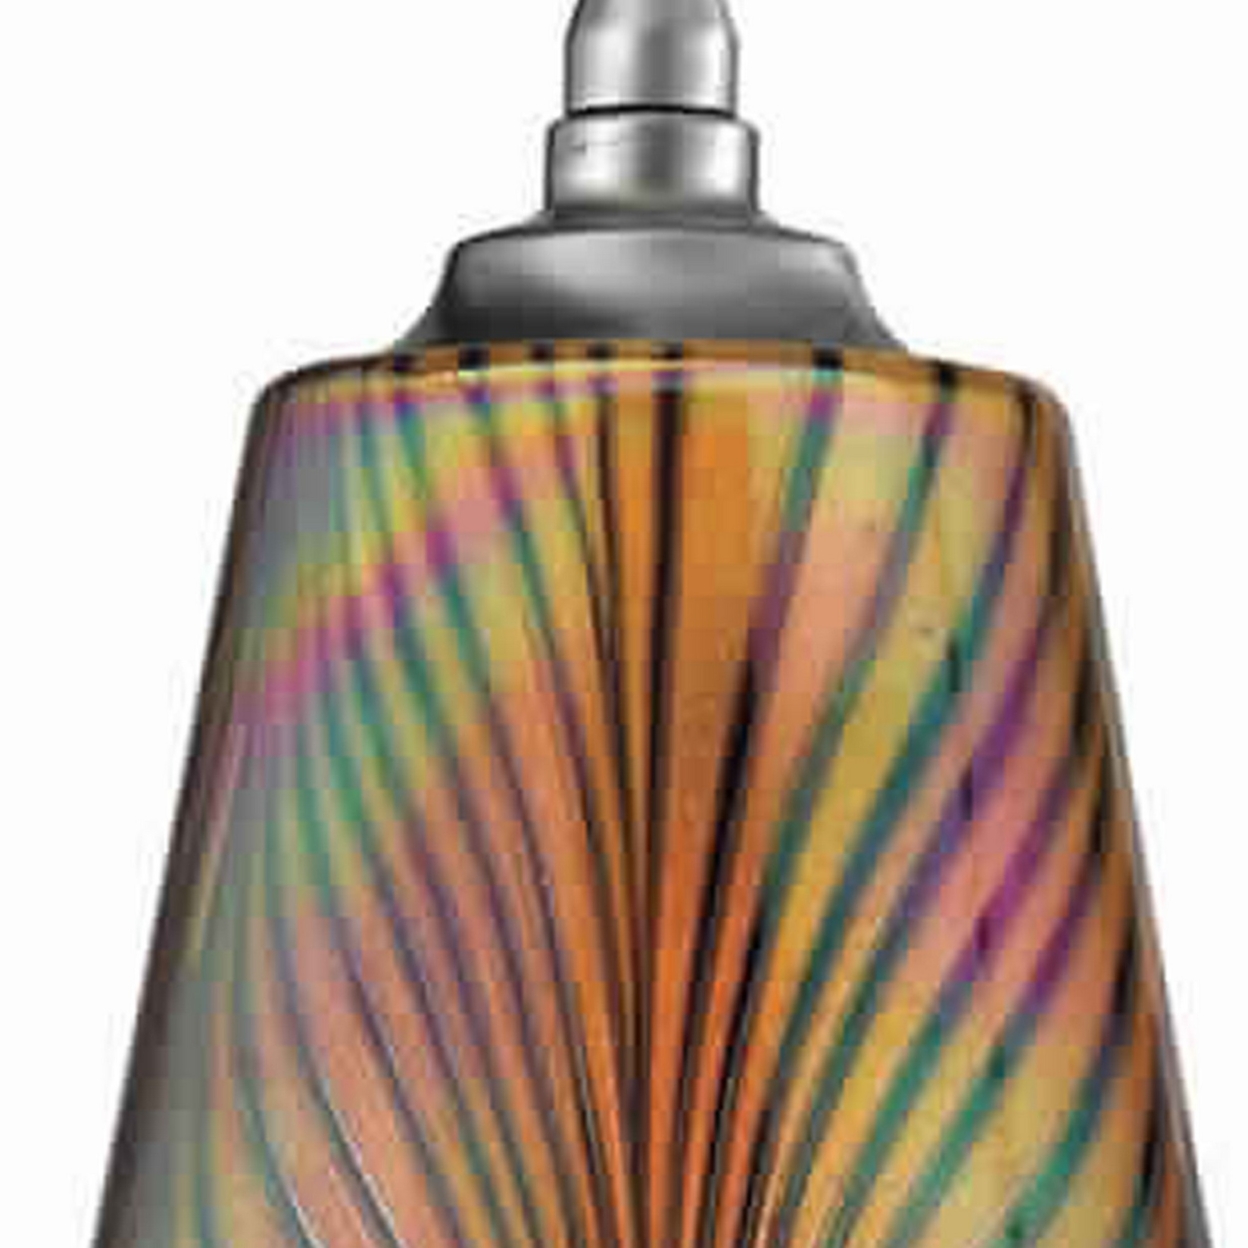 Tapered Design Glass Shade Pendant Lighting With Canopy, Multicolor- Saltoro Sherpi